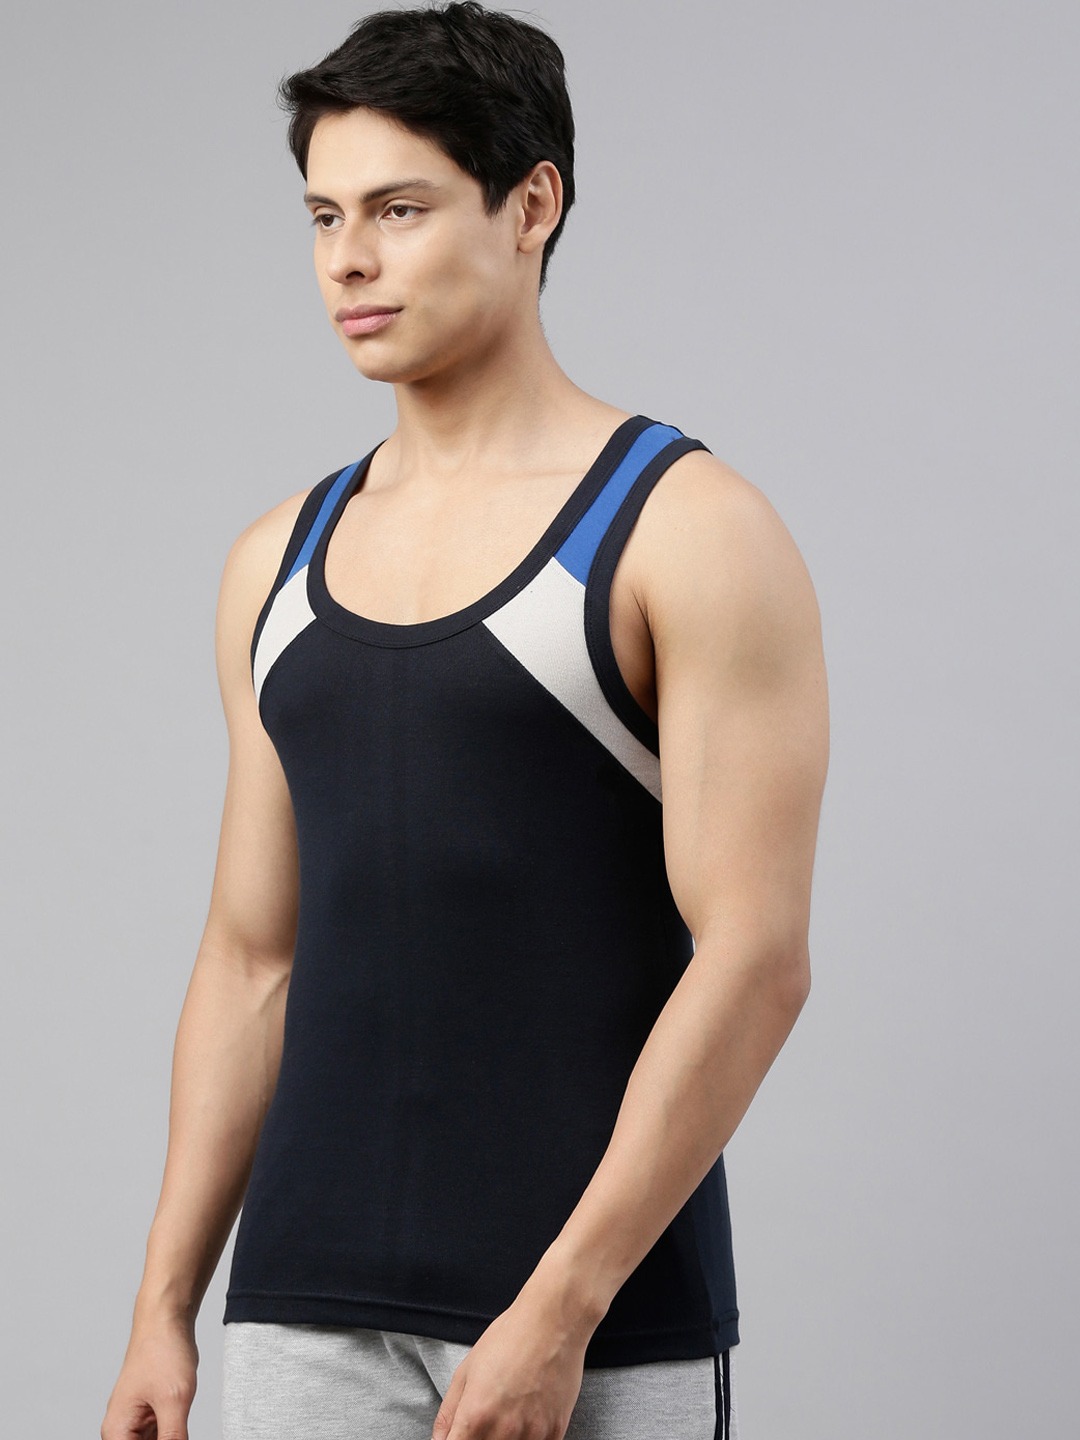 Clothing Innerwear Vests | DIXCY SCOTT Pack Of 2 Men Colourblocked Cotton Gym Vests - MQ07337